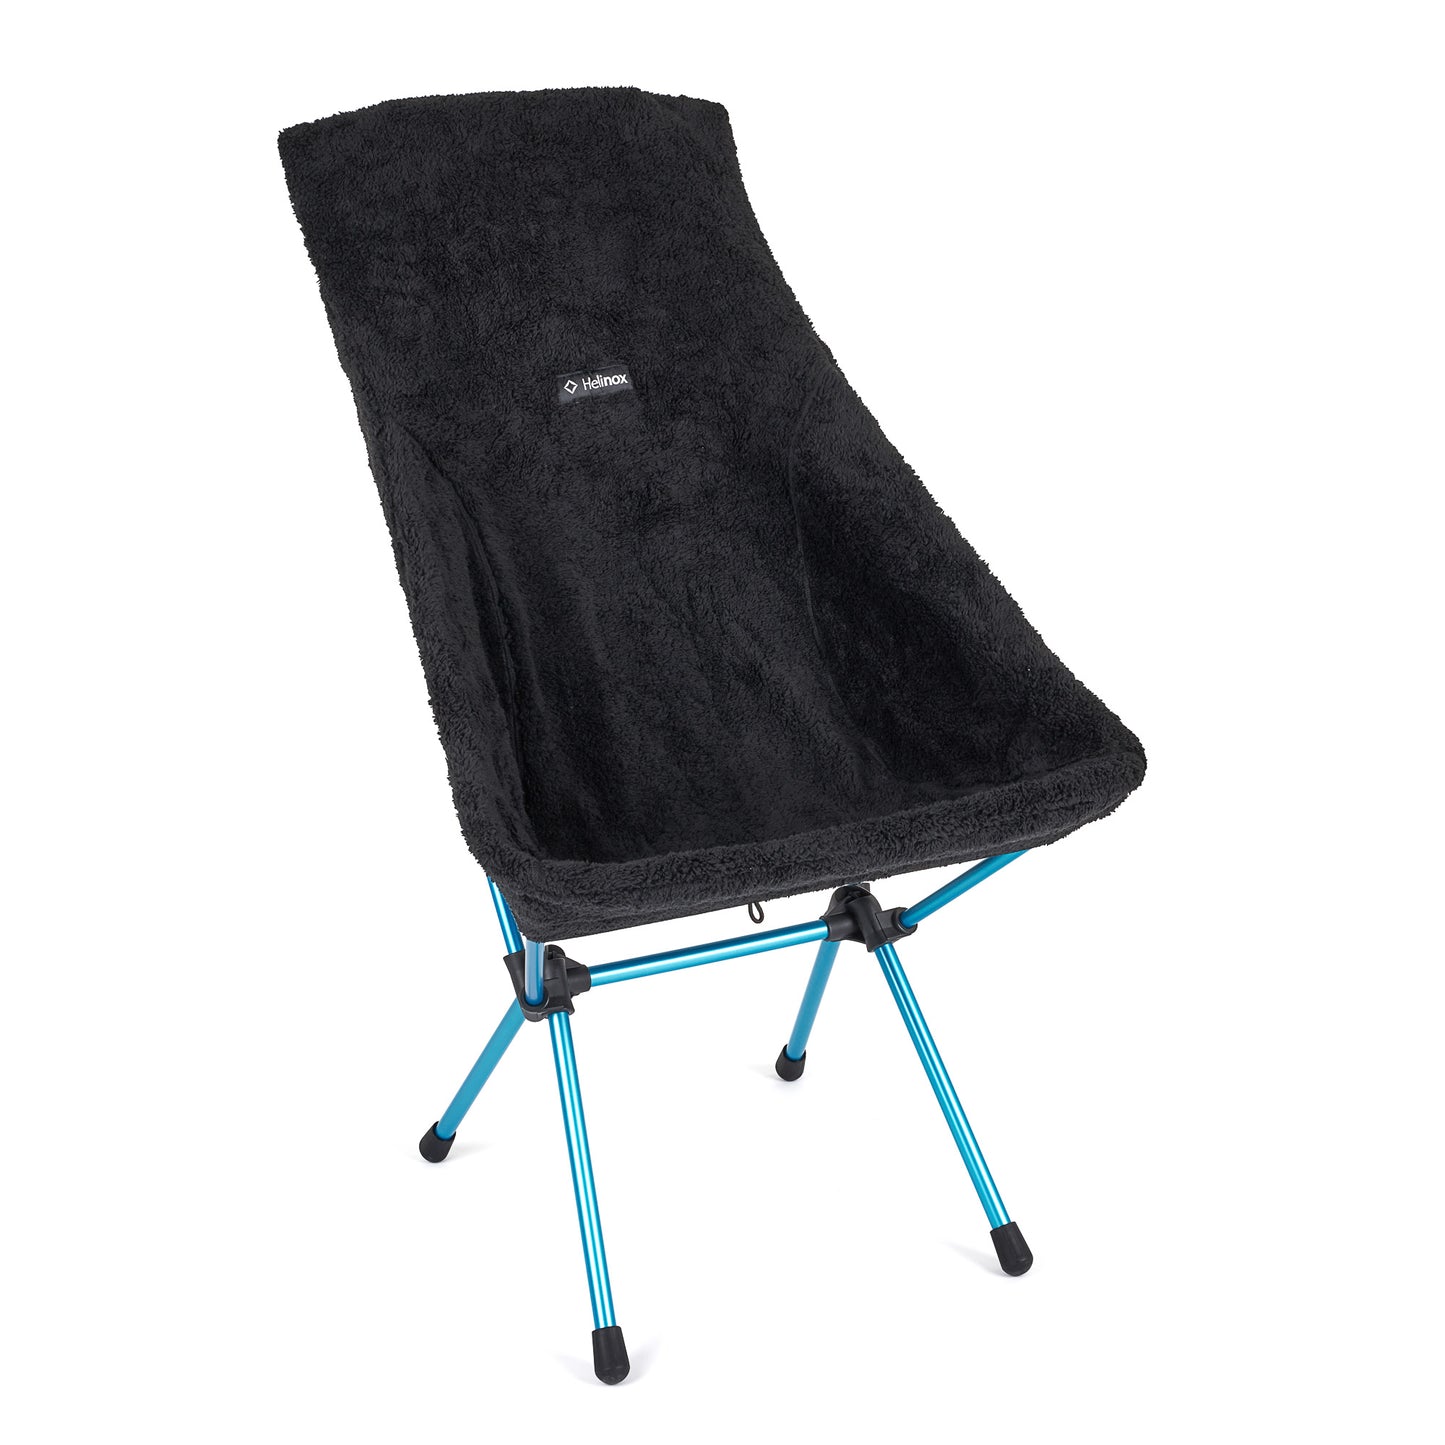 Fleece Seat Warmer for Sunset/Beach - Black